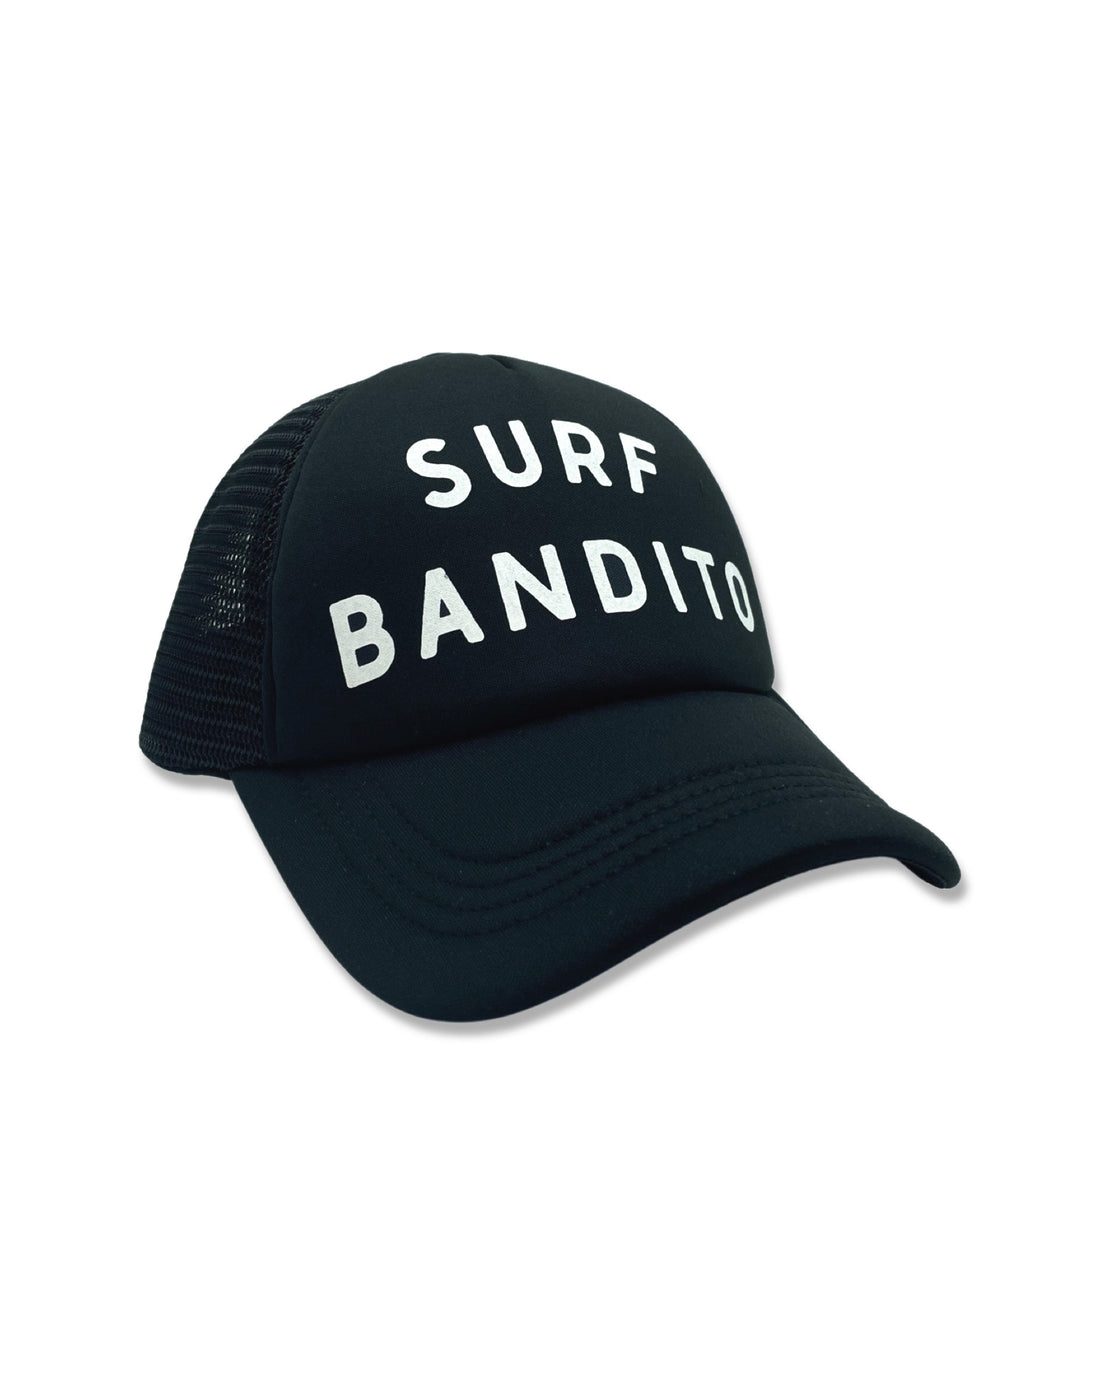 SURF BANDITO TRUCKER HAT